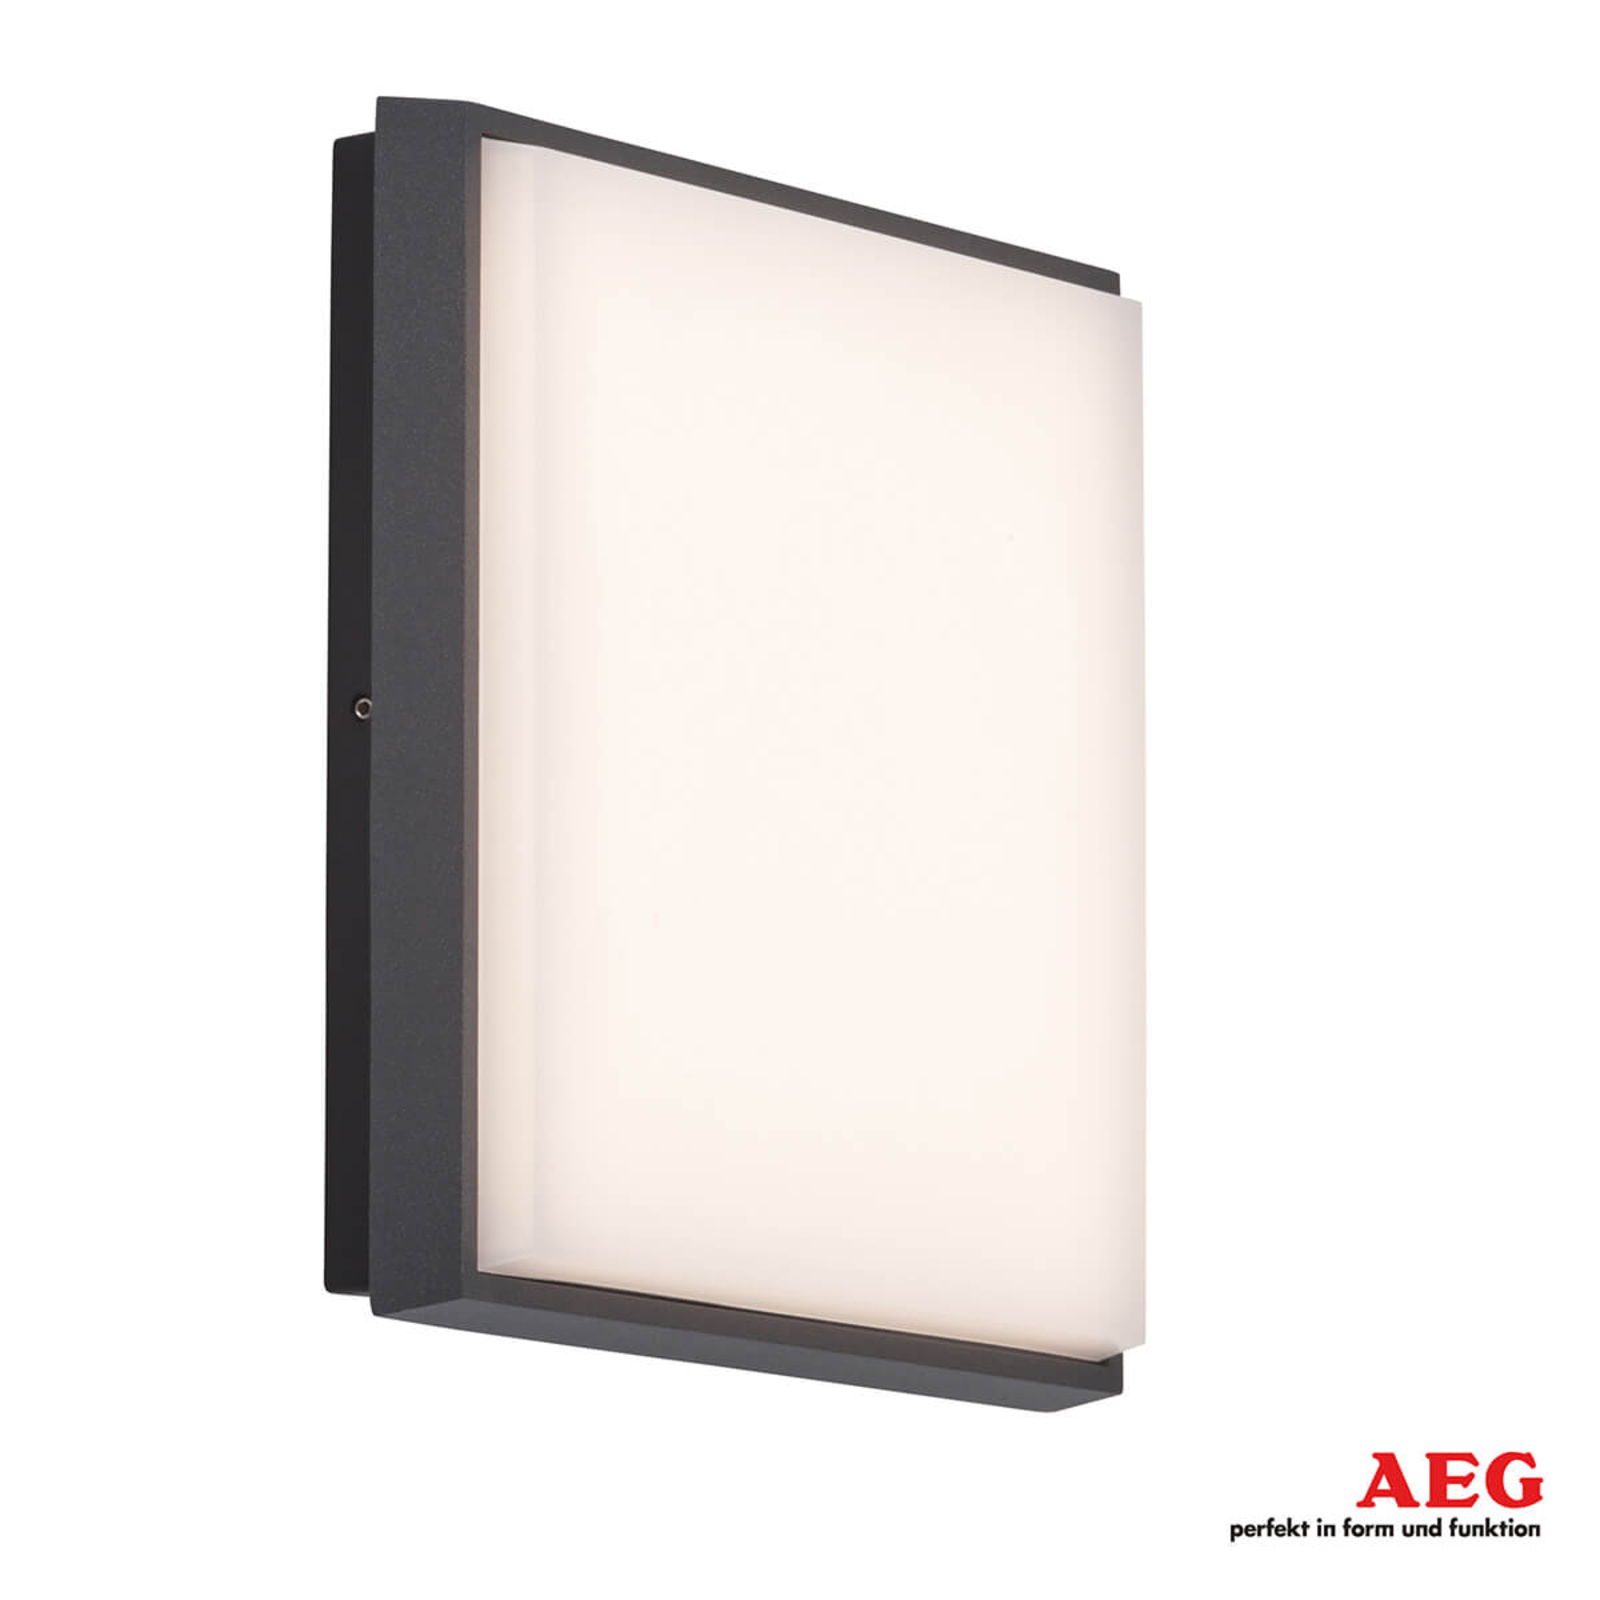 AEG Letan Square - helle LED-Außenwandlampe 23 W